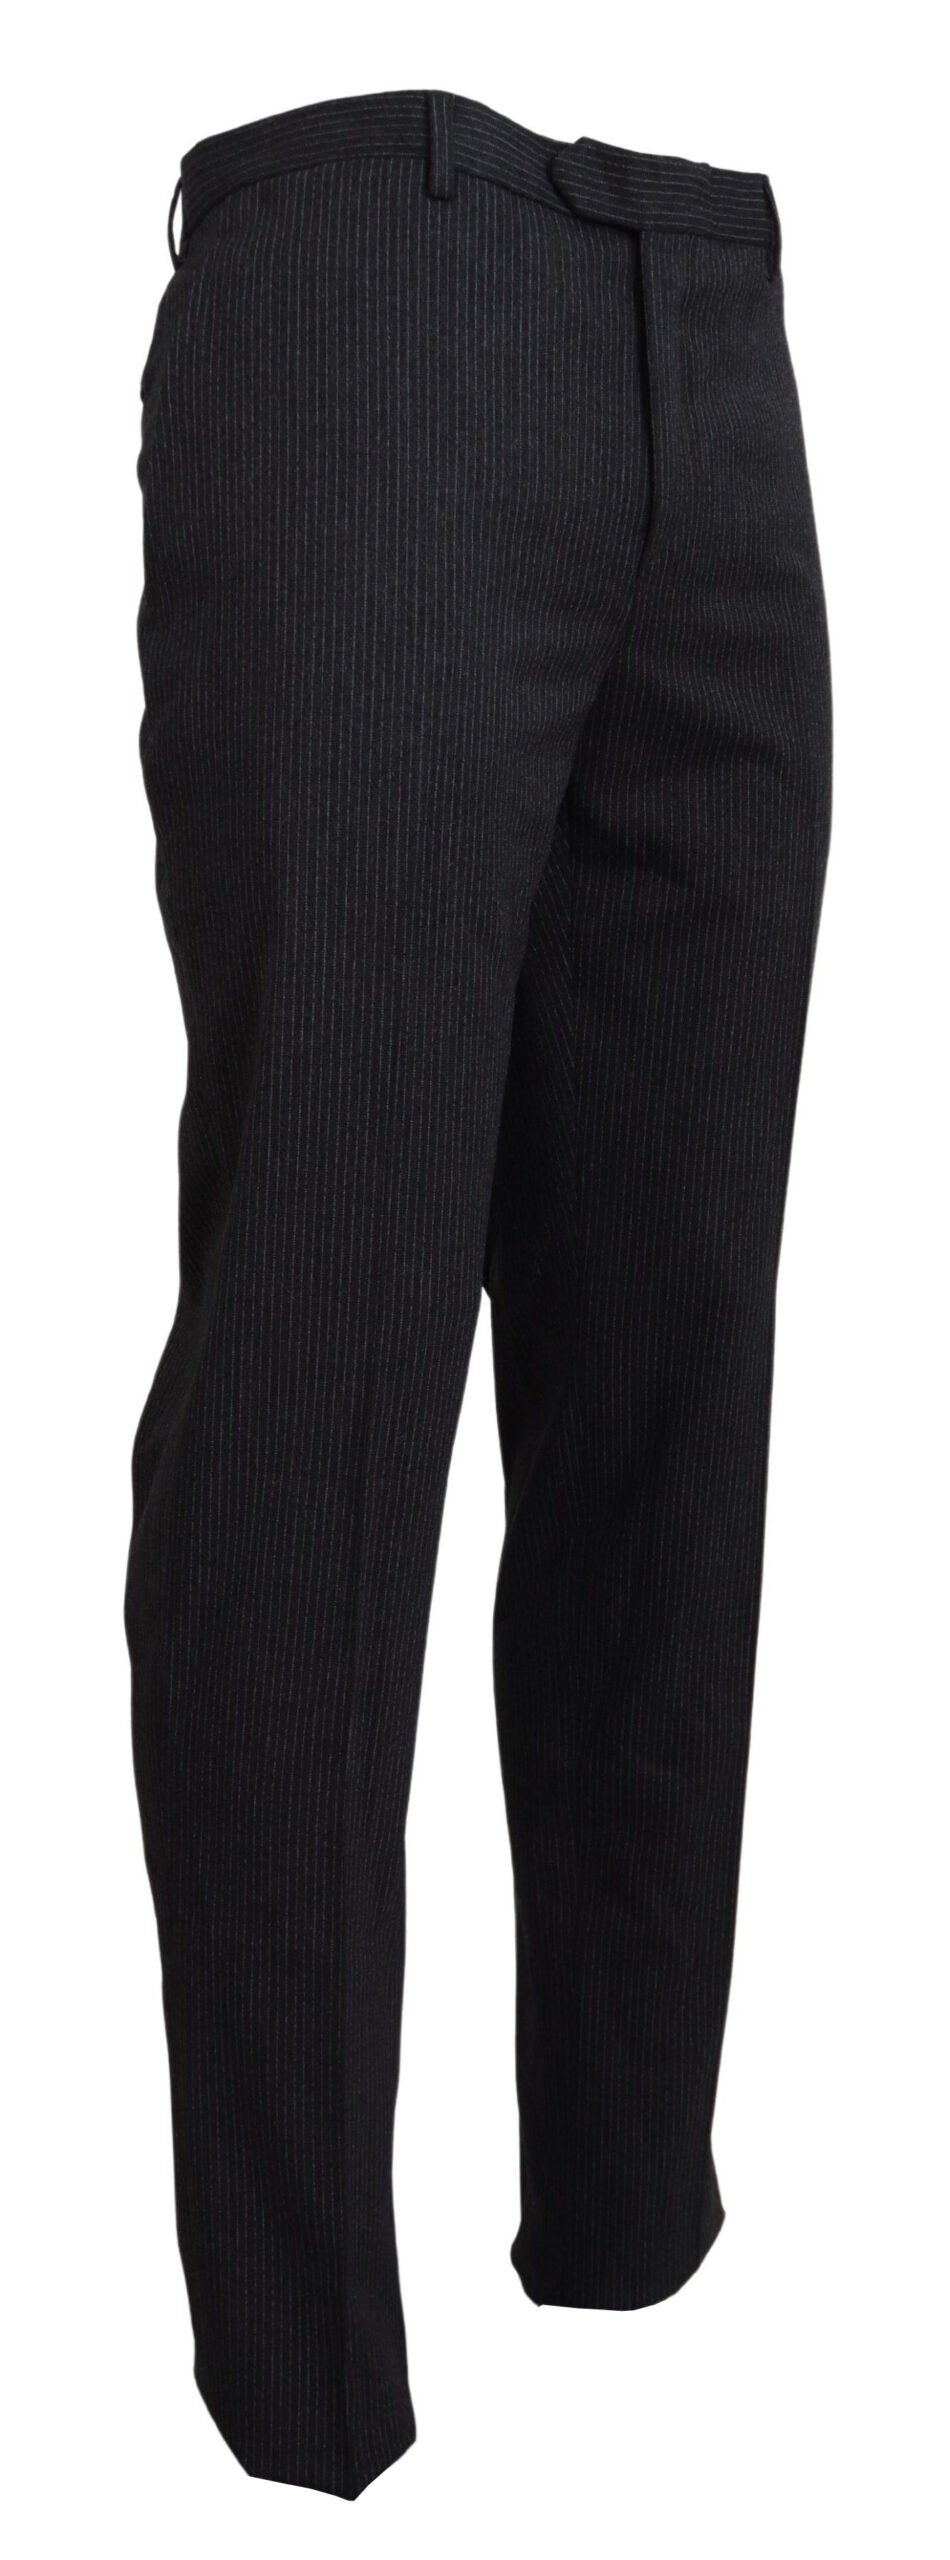 Elegant Black Wool Blend Pants for Men